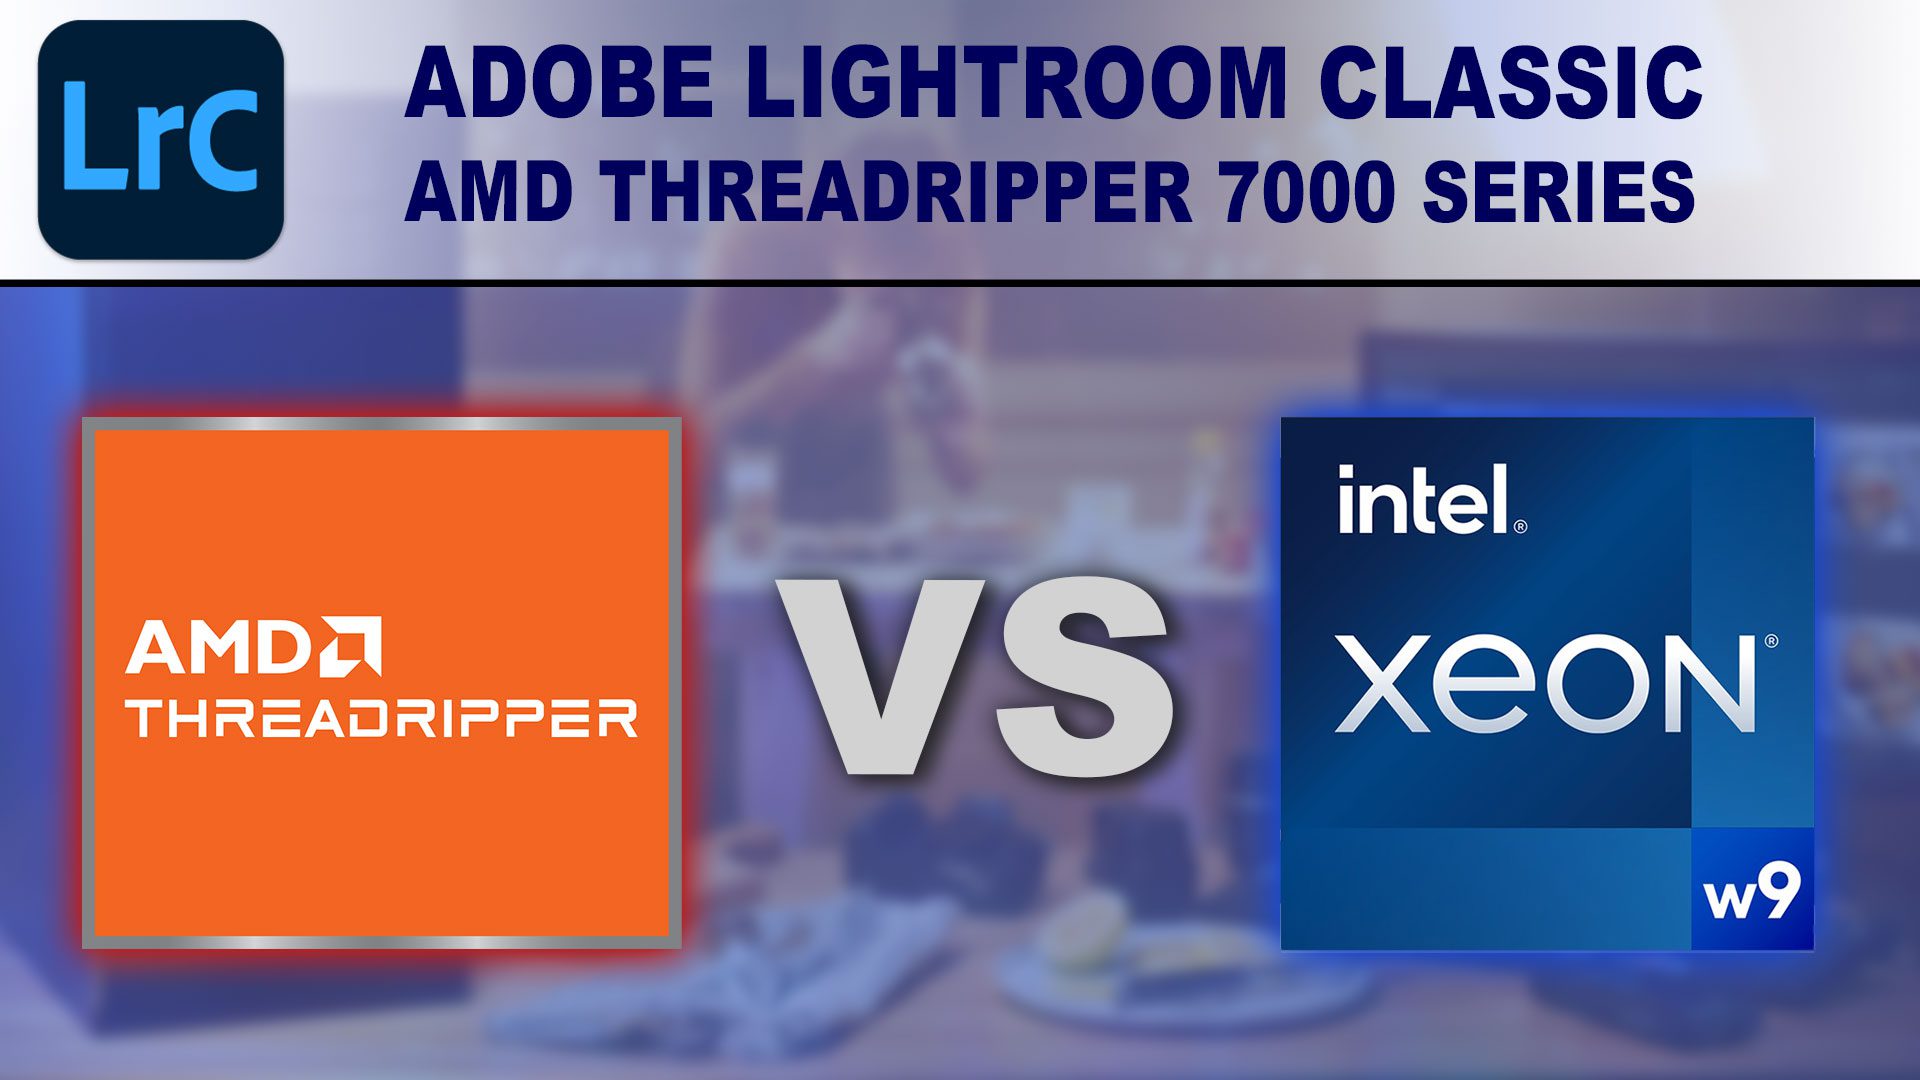 Decorative Image: Lightroom Classic - AMD Threadripper vs Intel Xeon